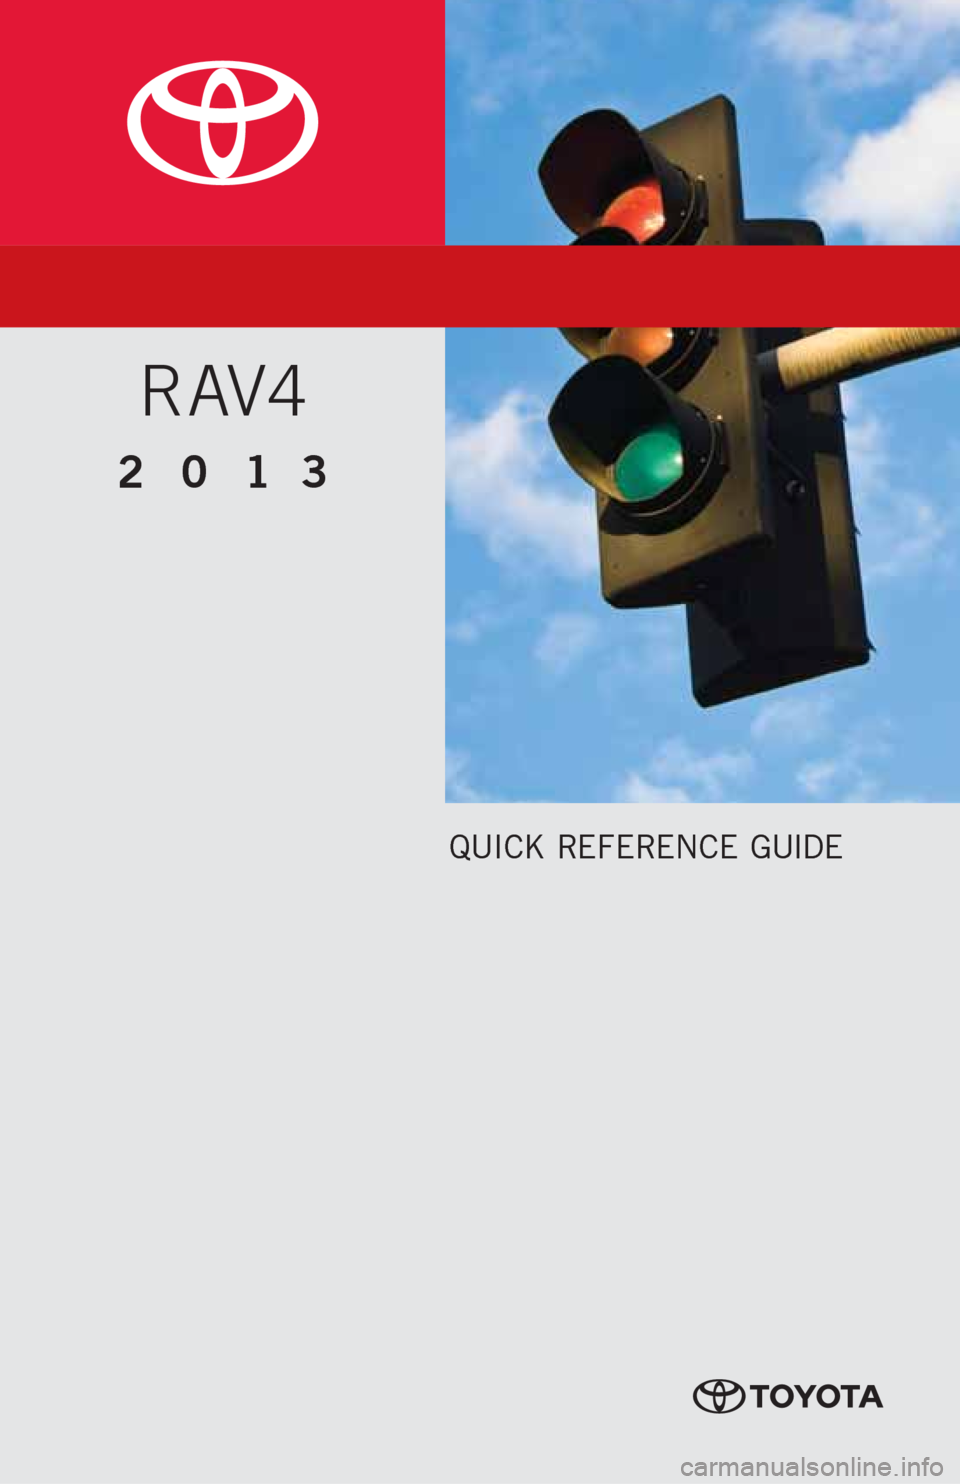 TOYOTA RAV4 2013 XA40 / 4.G Quick Reference Guide QUICK REFERENCE GUIDE
2013
RAV4 